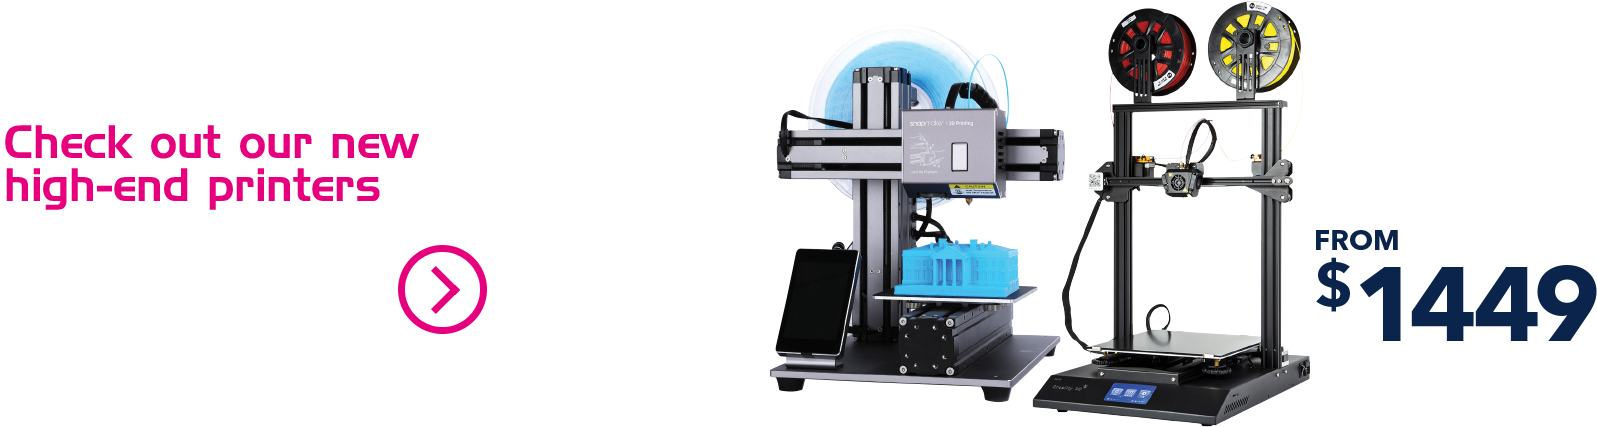 3 D Printer Workbench Essentials Ad Banner PNG